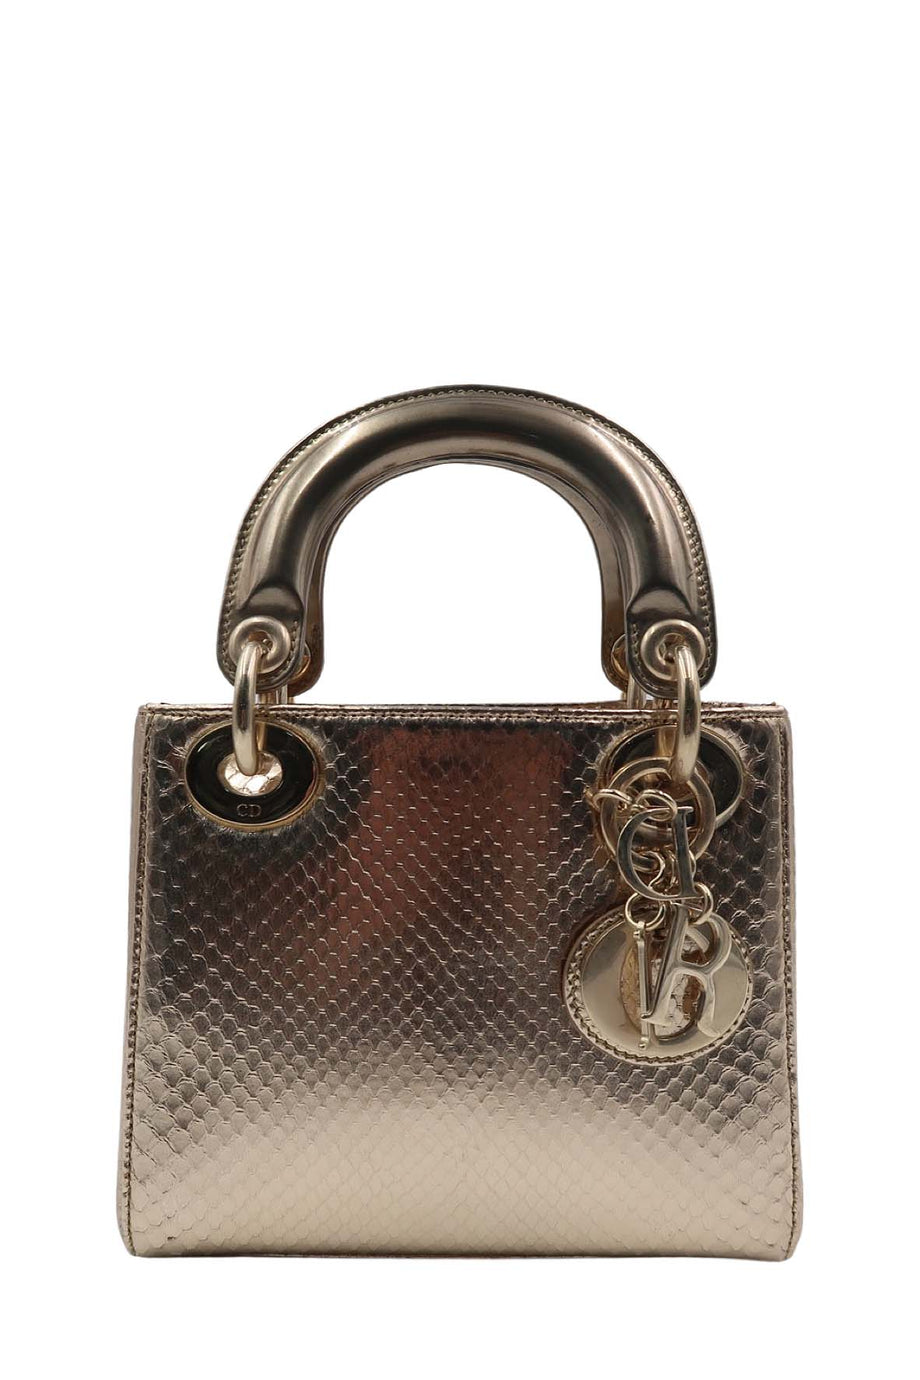 Sold at Auction: λ Christian Dior Metallic Gold Python Mini Lady Dior Bag